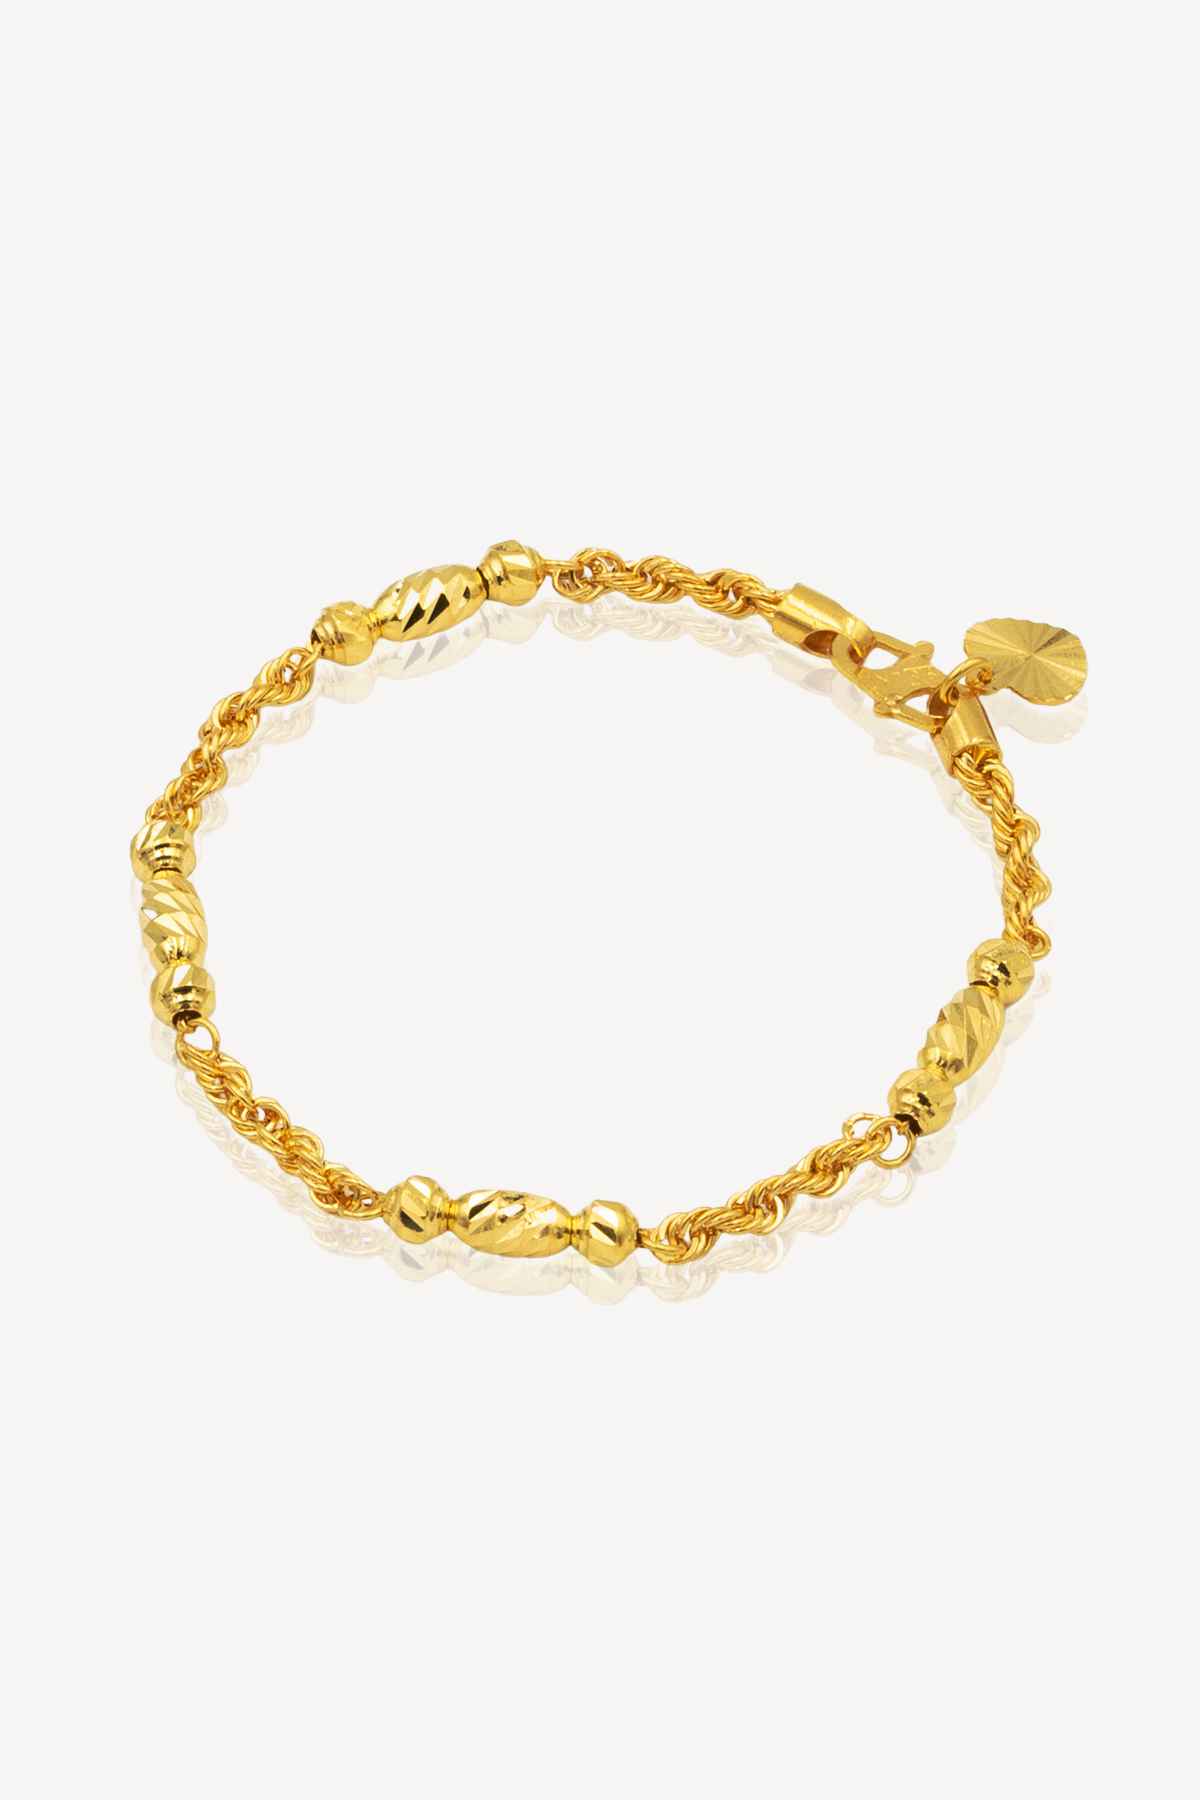 916 Gold Twisted Rope Bracelet